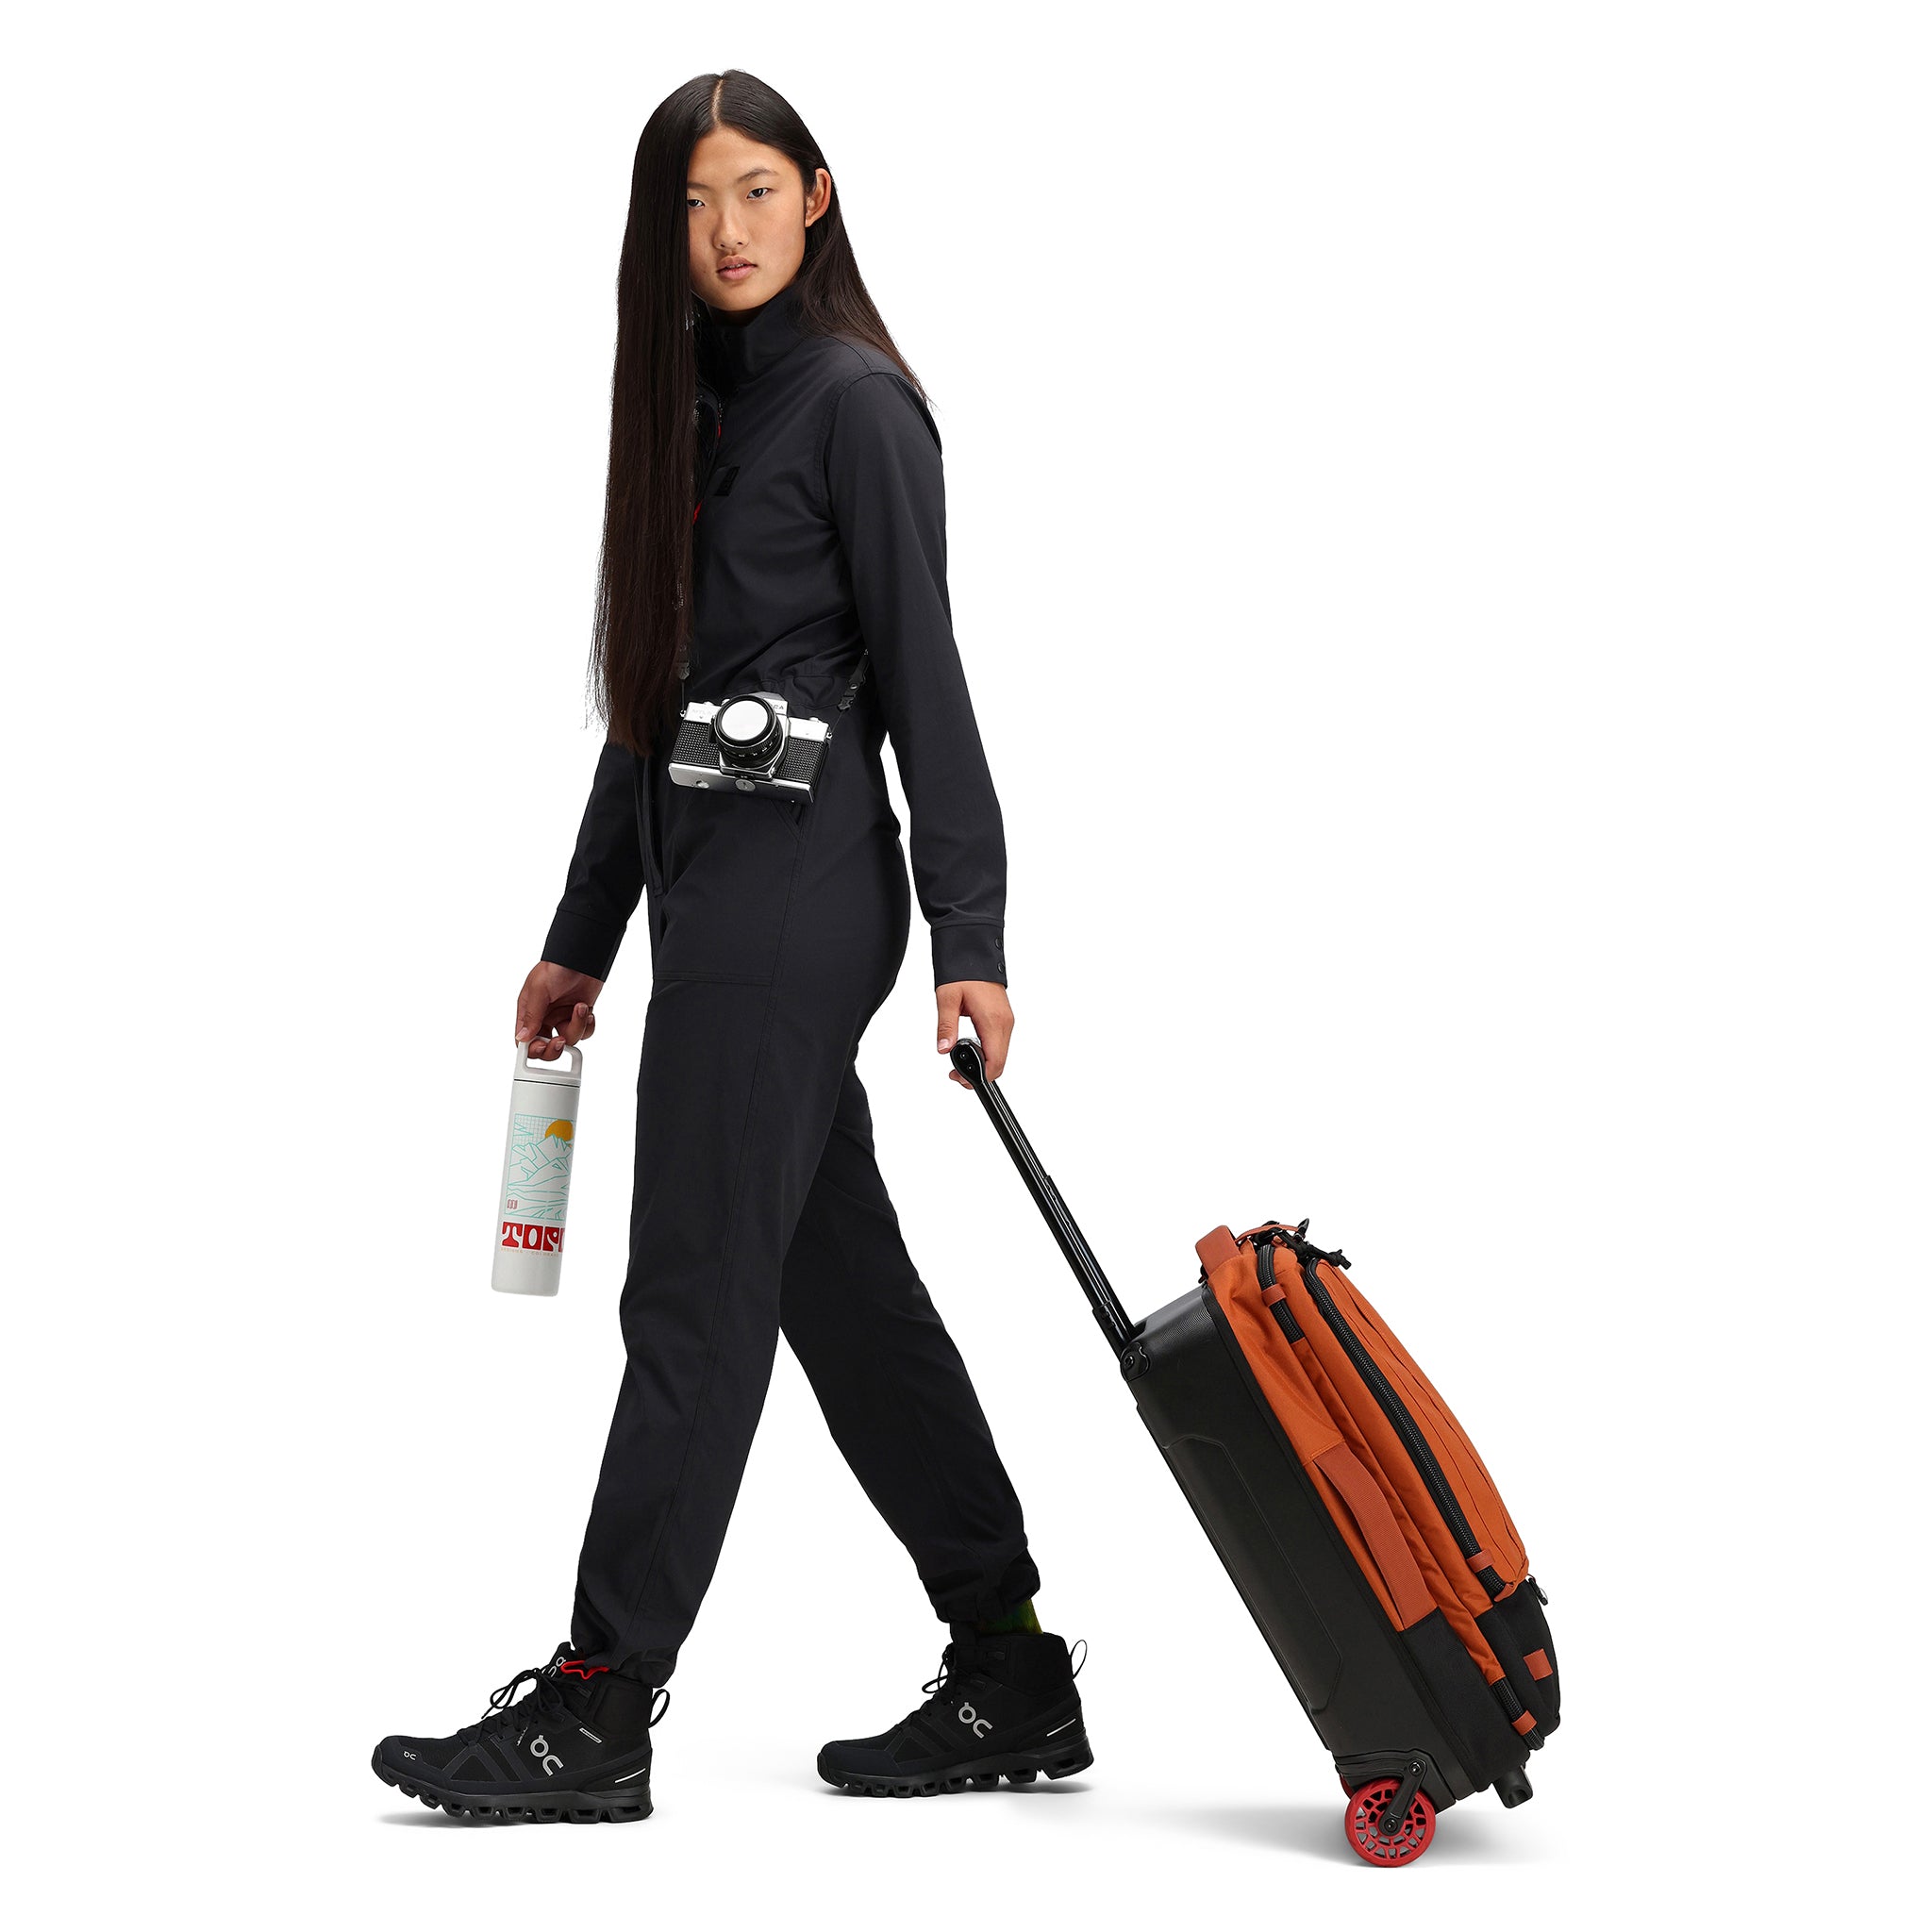 Global Travel Bag Roller  Bags, Travel bag, Topo designs